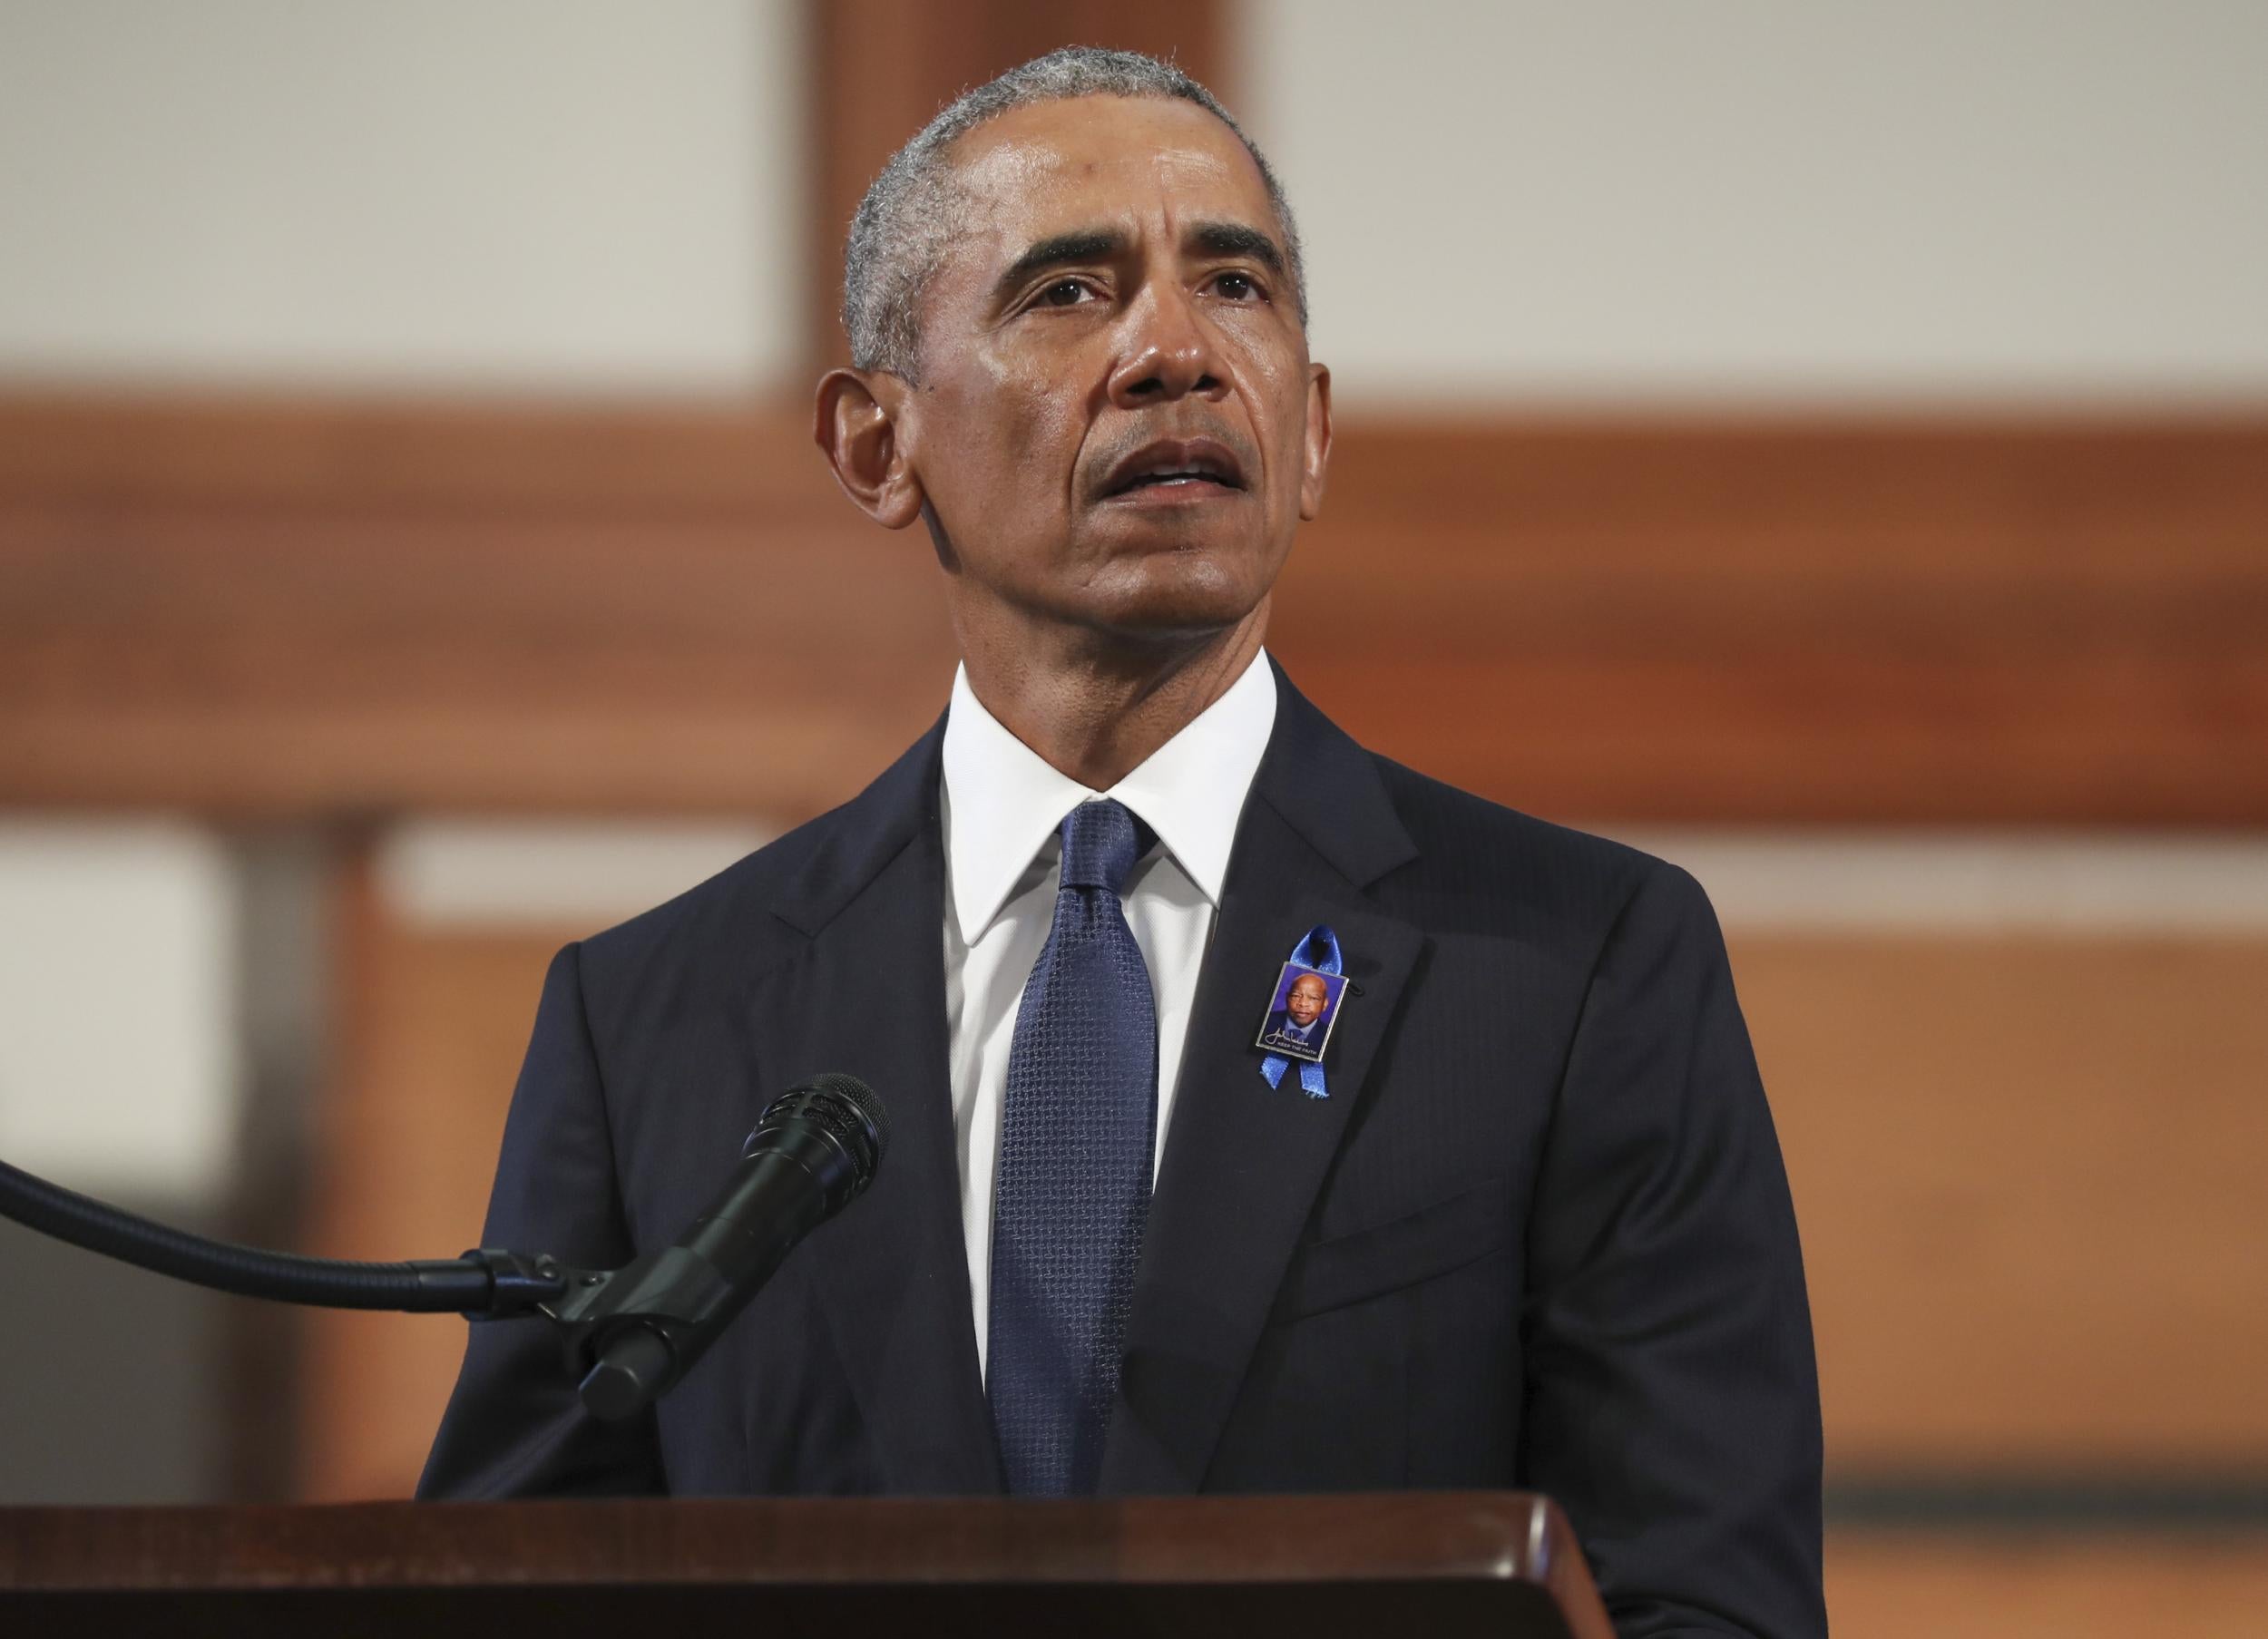 Obama delivered a 40-minute eulogy to John Lewis